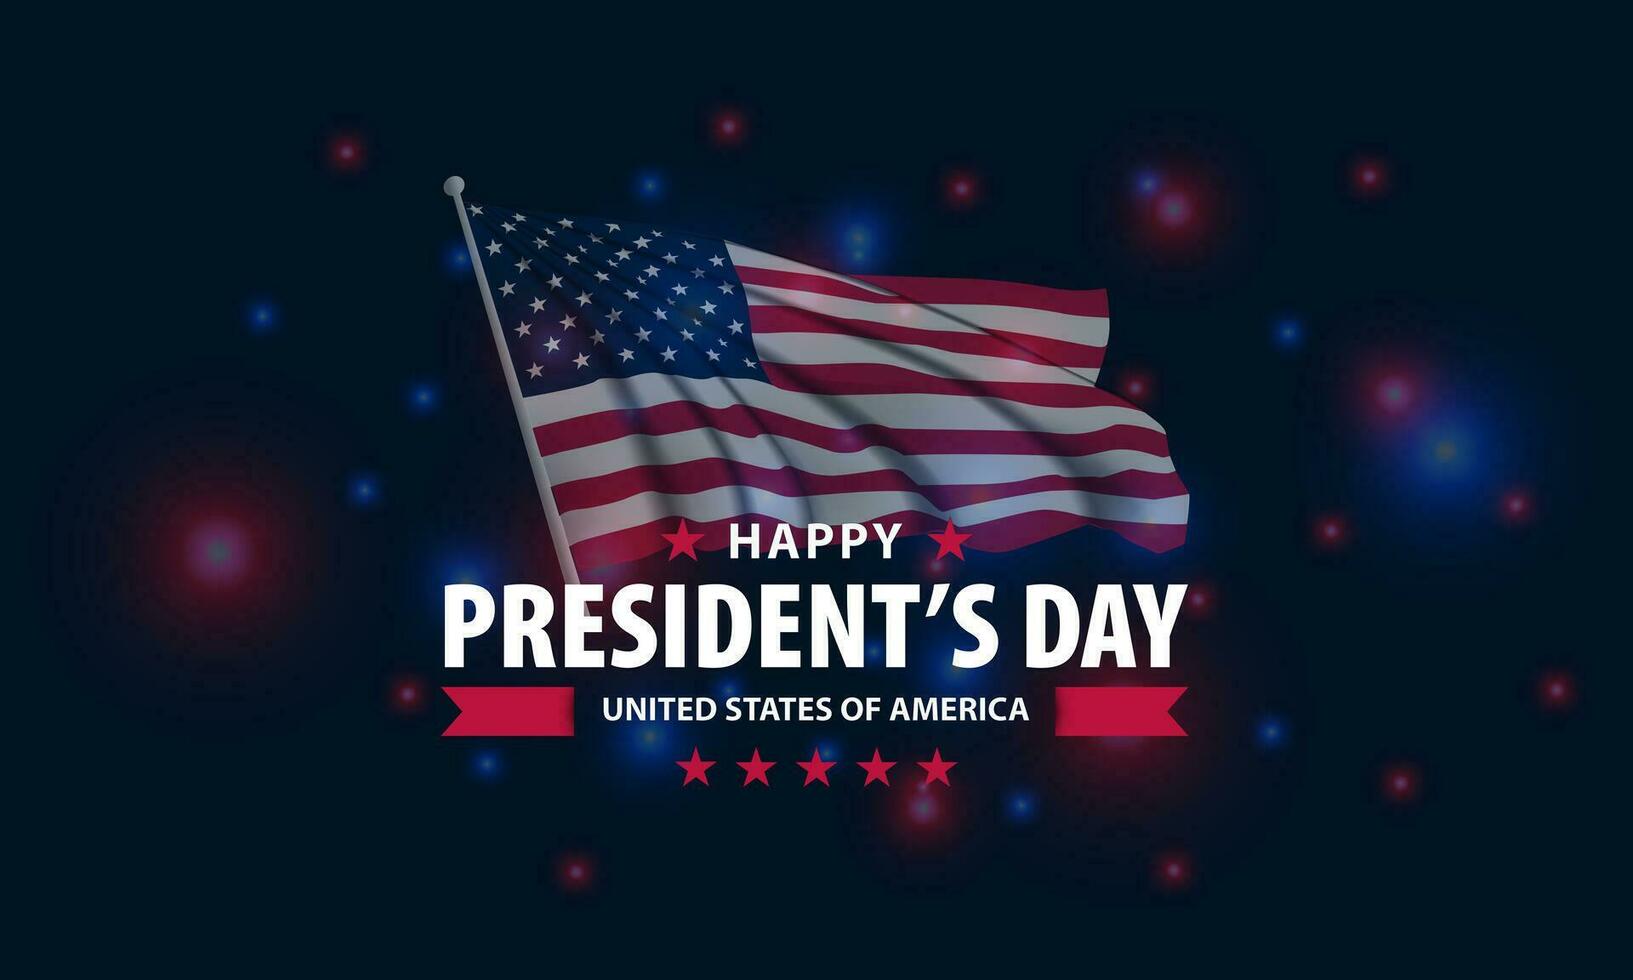 President's Day Background Design. Banner, Poster, Greeting Card. Vector Illustration